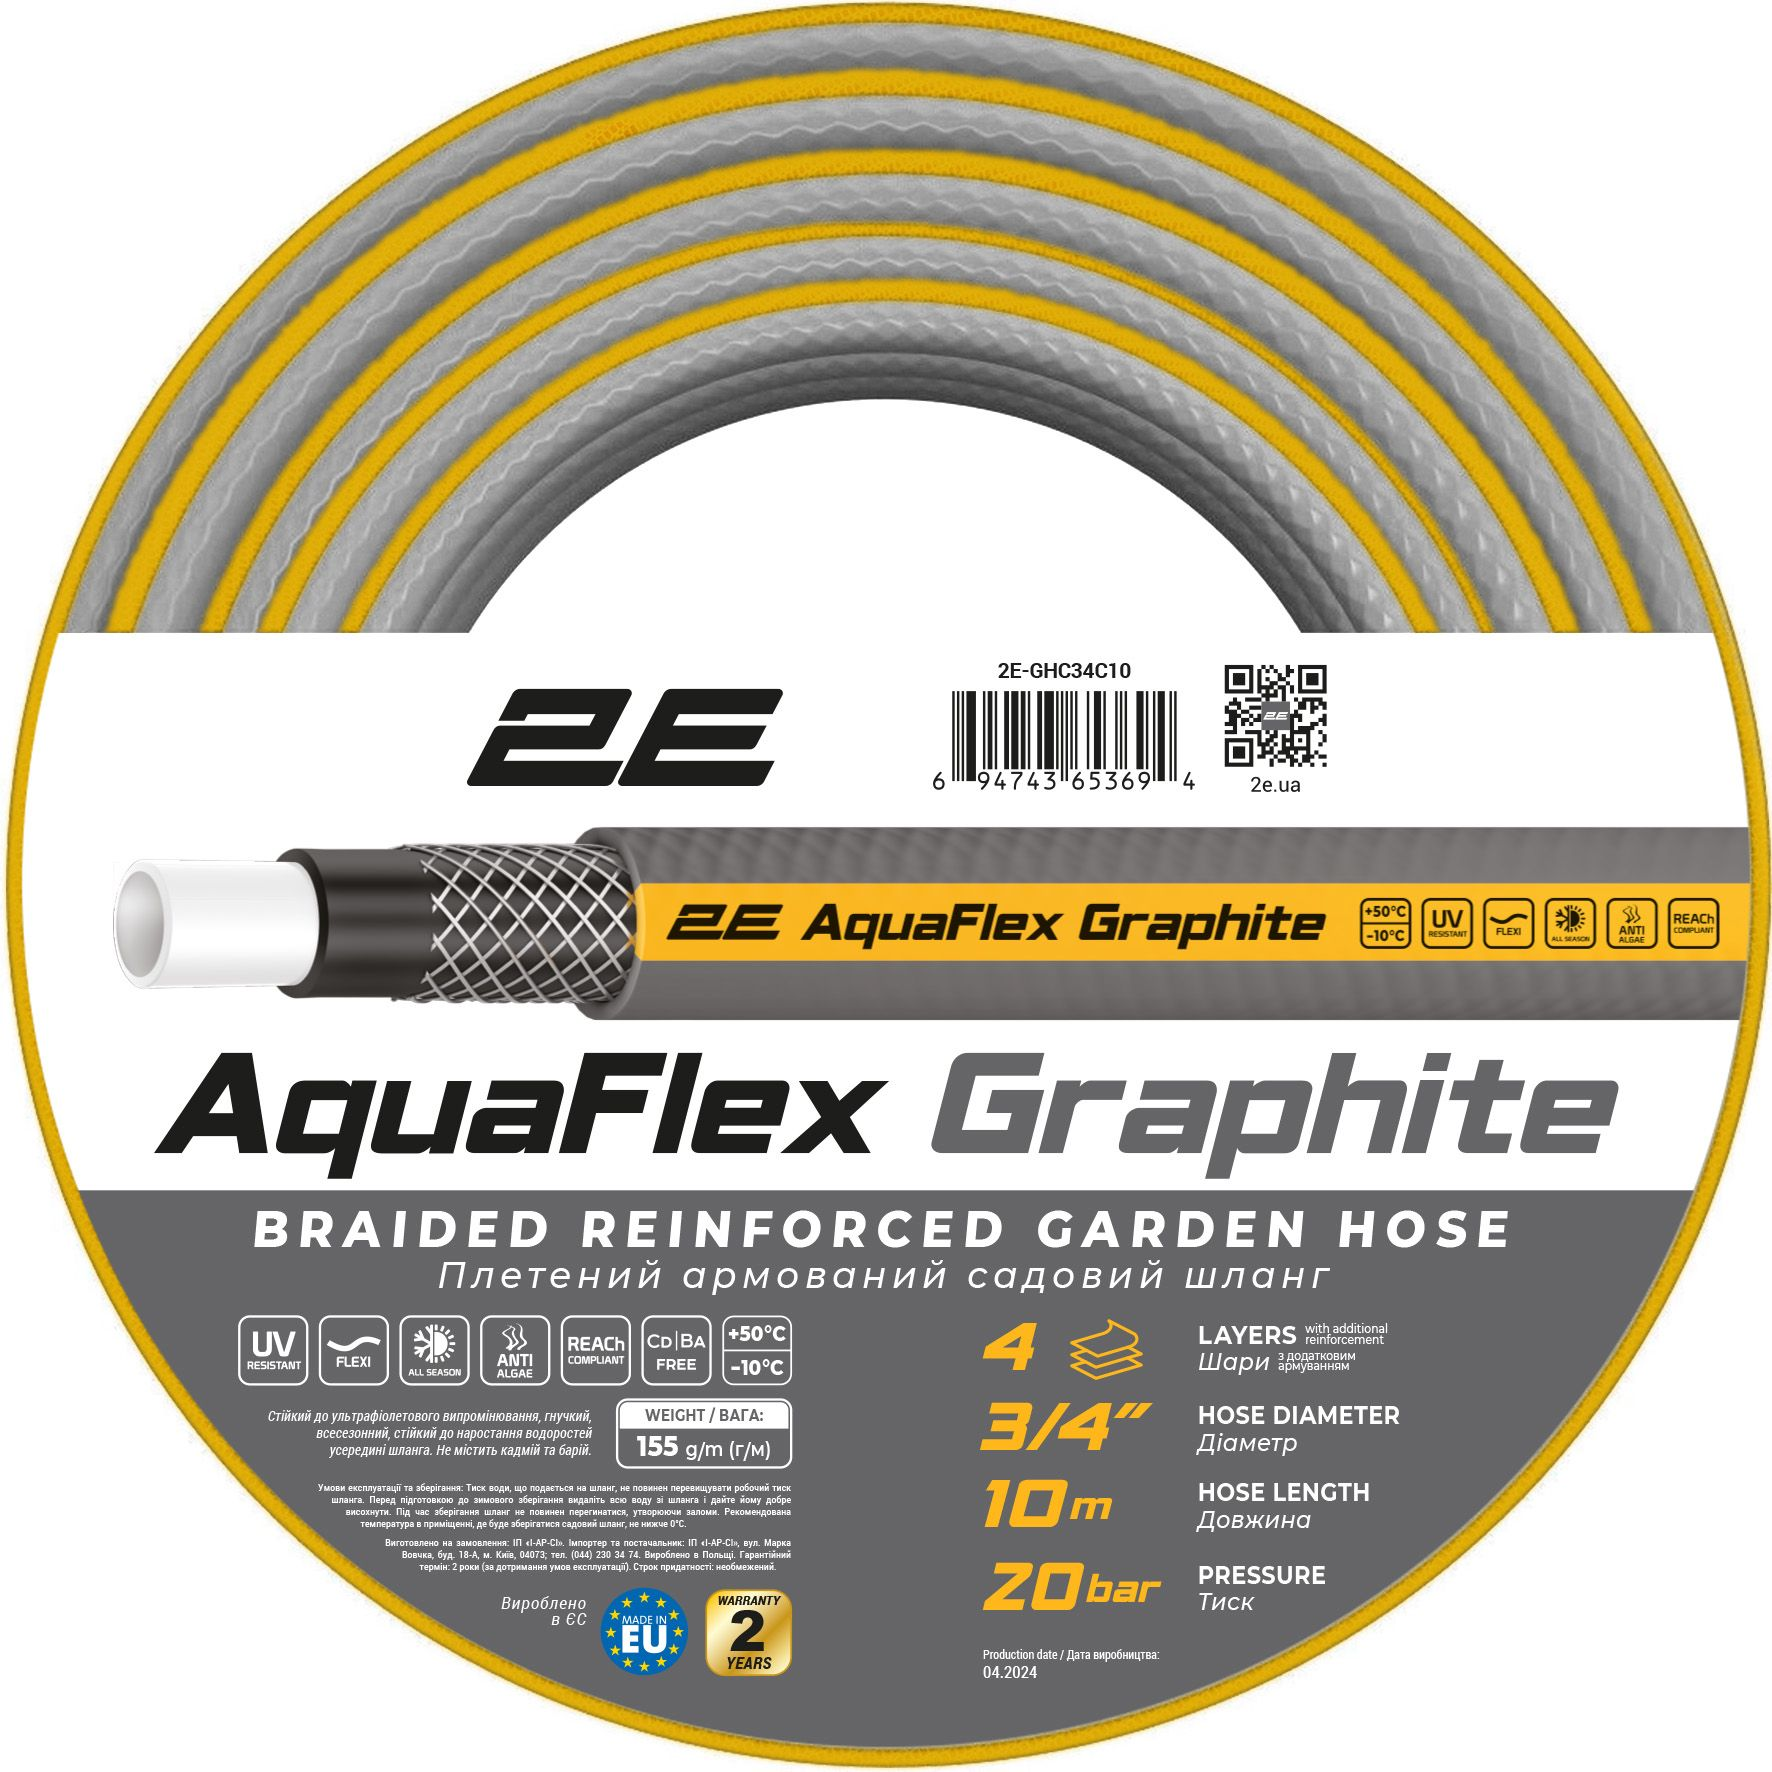 Шланг садовый 2E Aquaflex Graphite 3/4 10м (2E-GHC34C10) фото 1